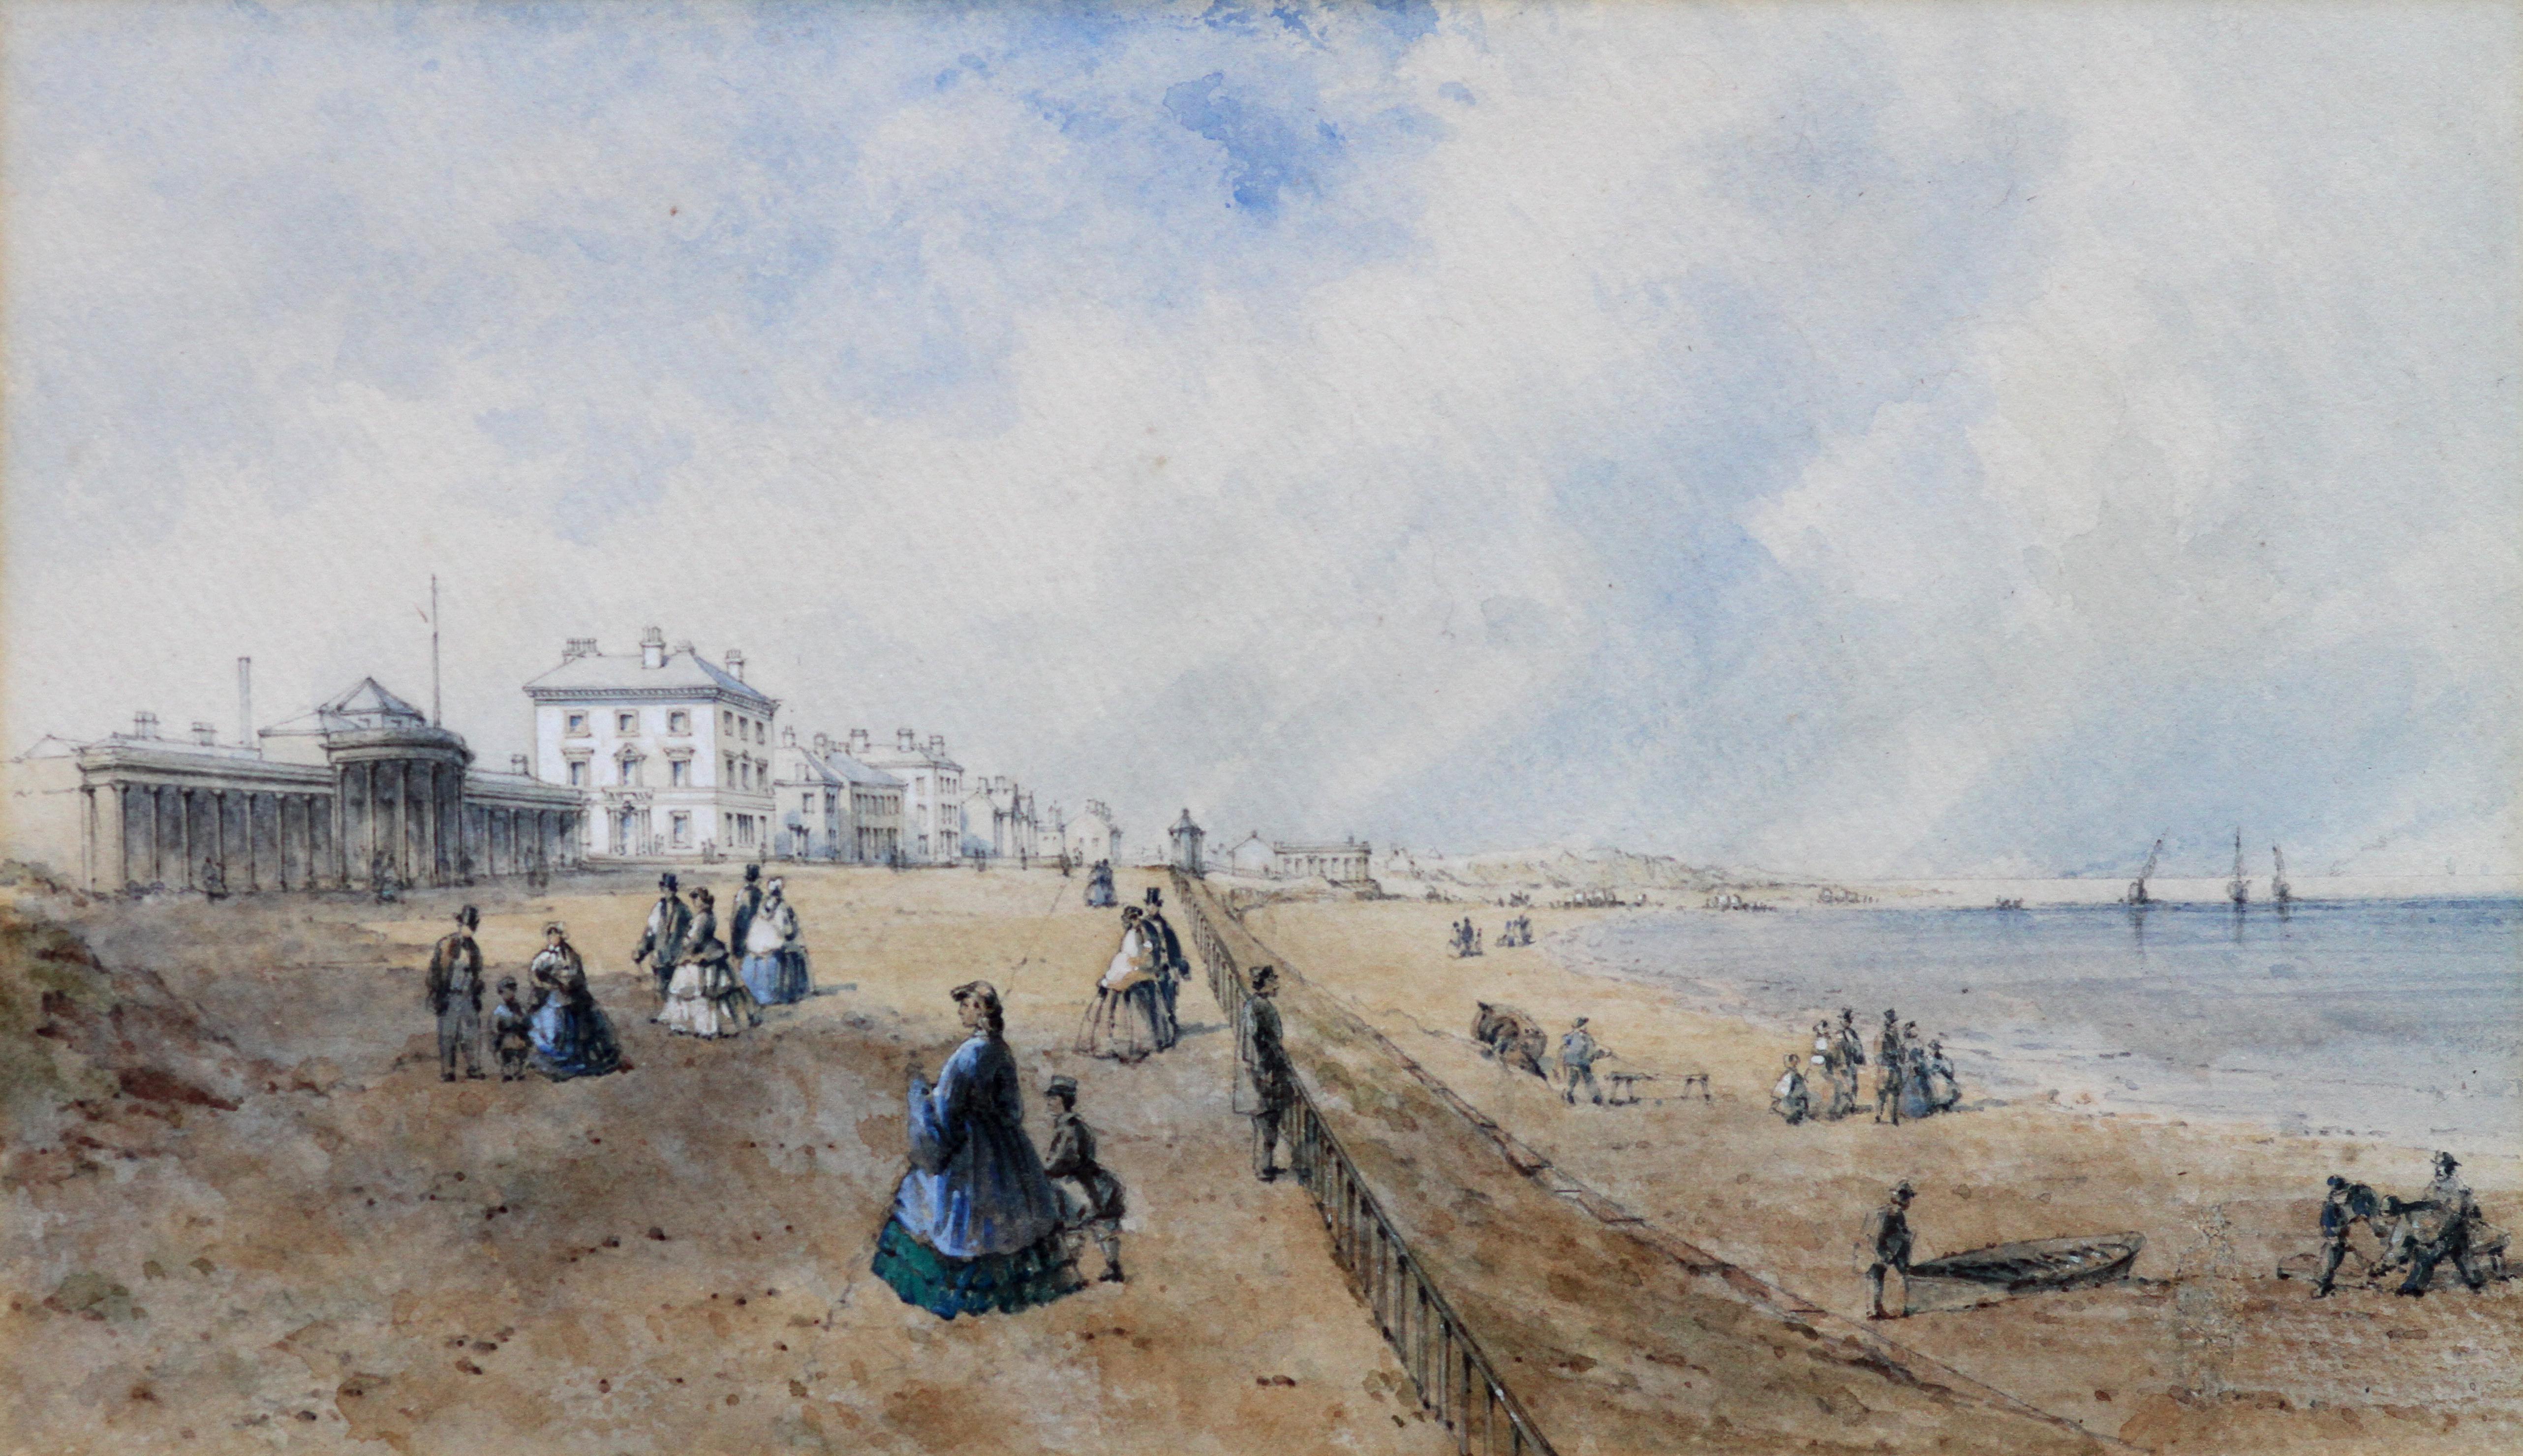 Promenade at Southport - British 19th century art coastal landscape watercolour - Art by Unknown